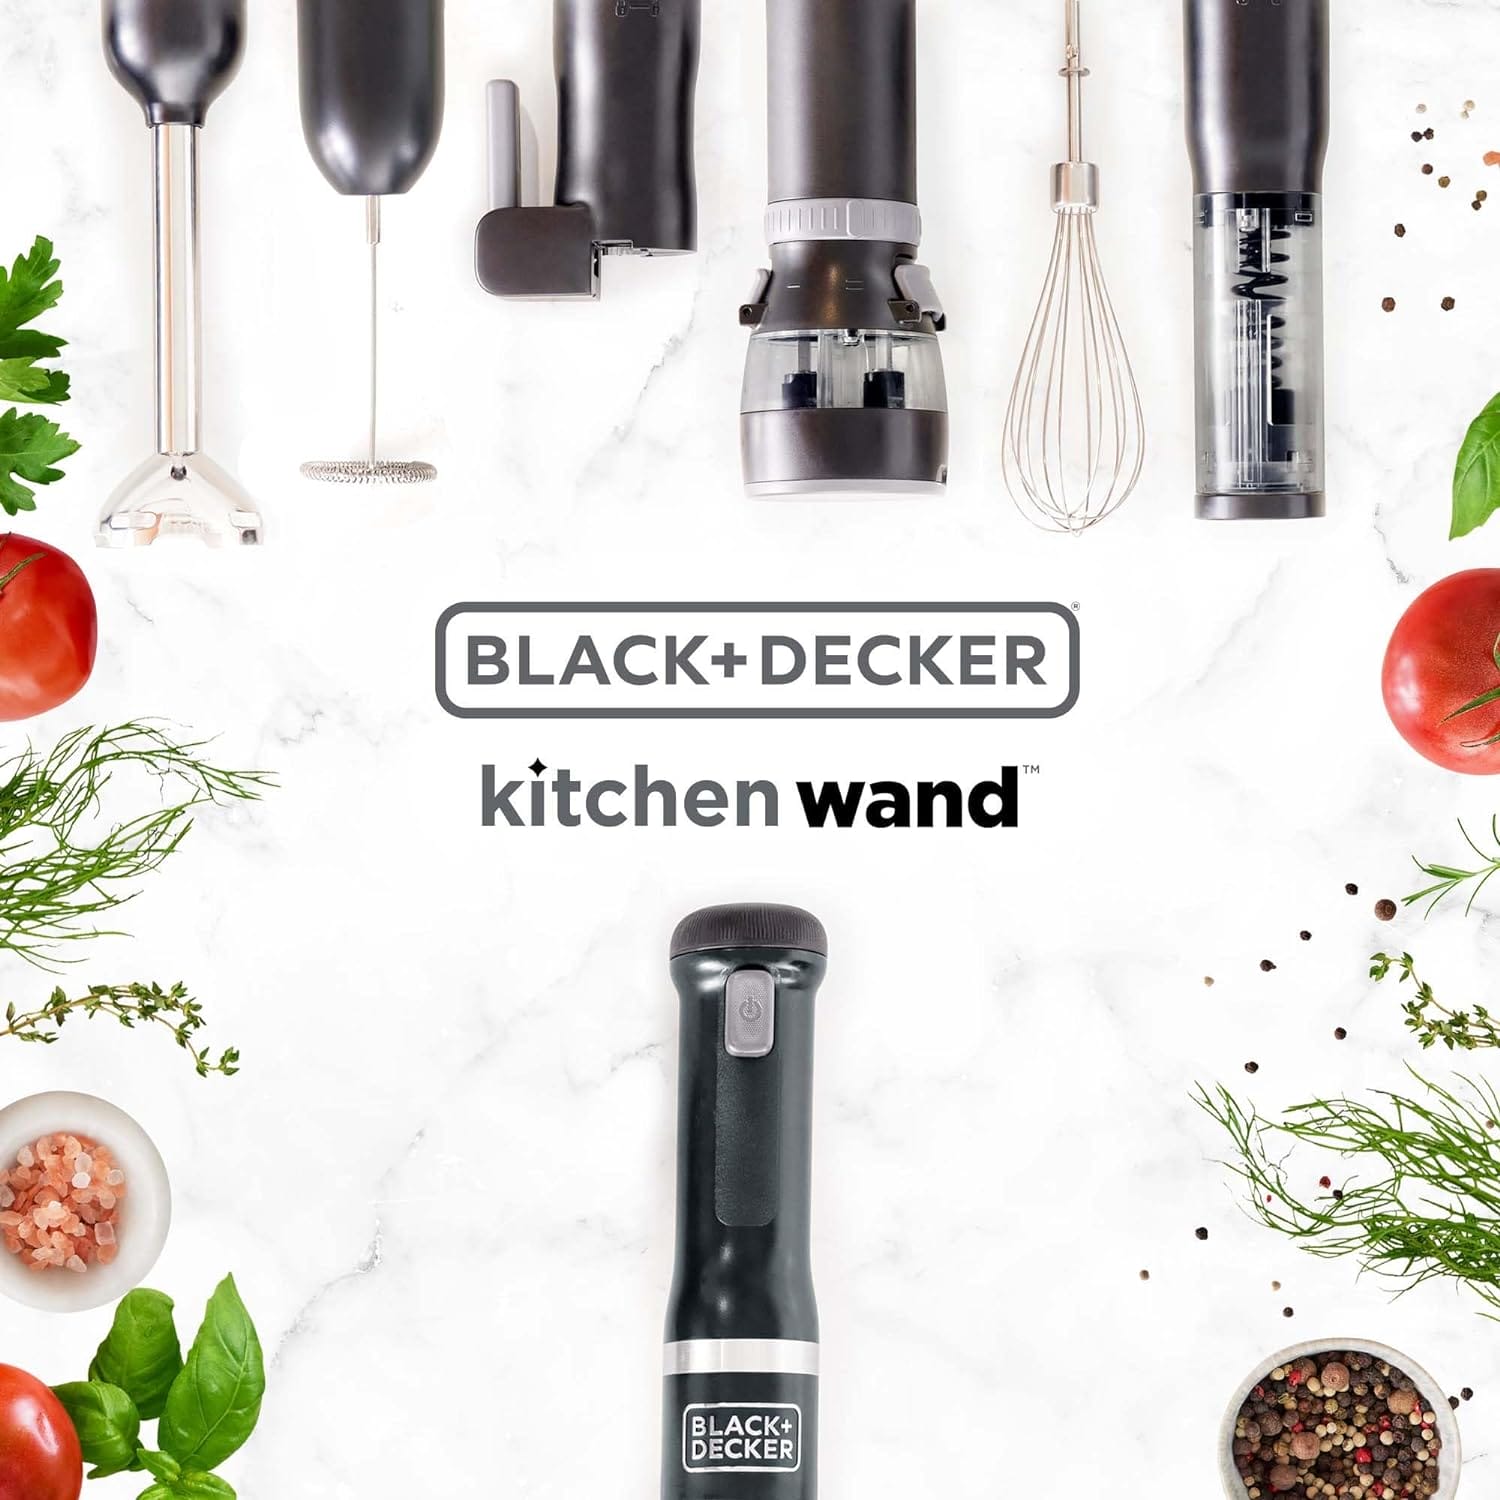 BLACK+DECKER Kitchen Wand Cordless Immersion Blender, Hand Blender with Charging Dock, Red (BCKM1011K06)